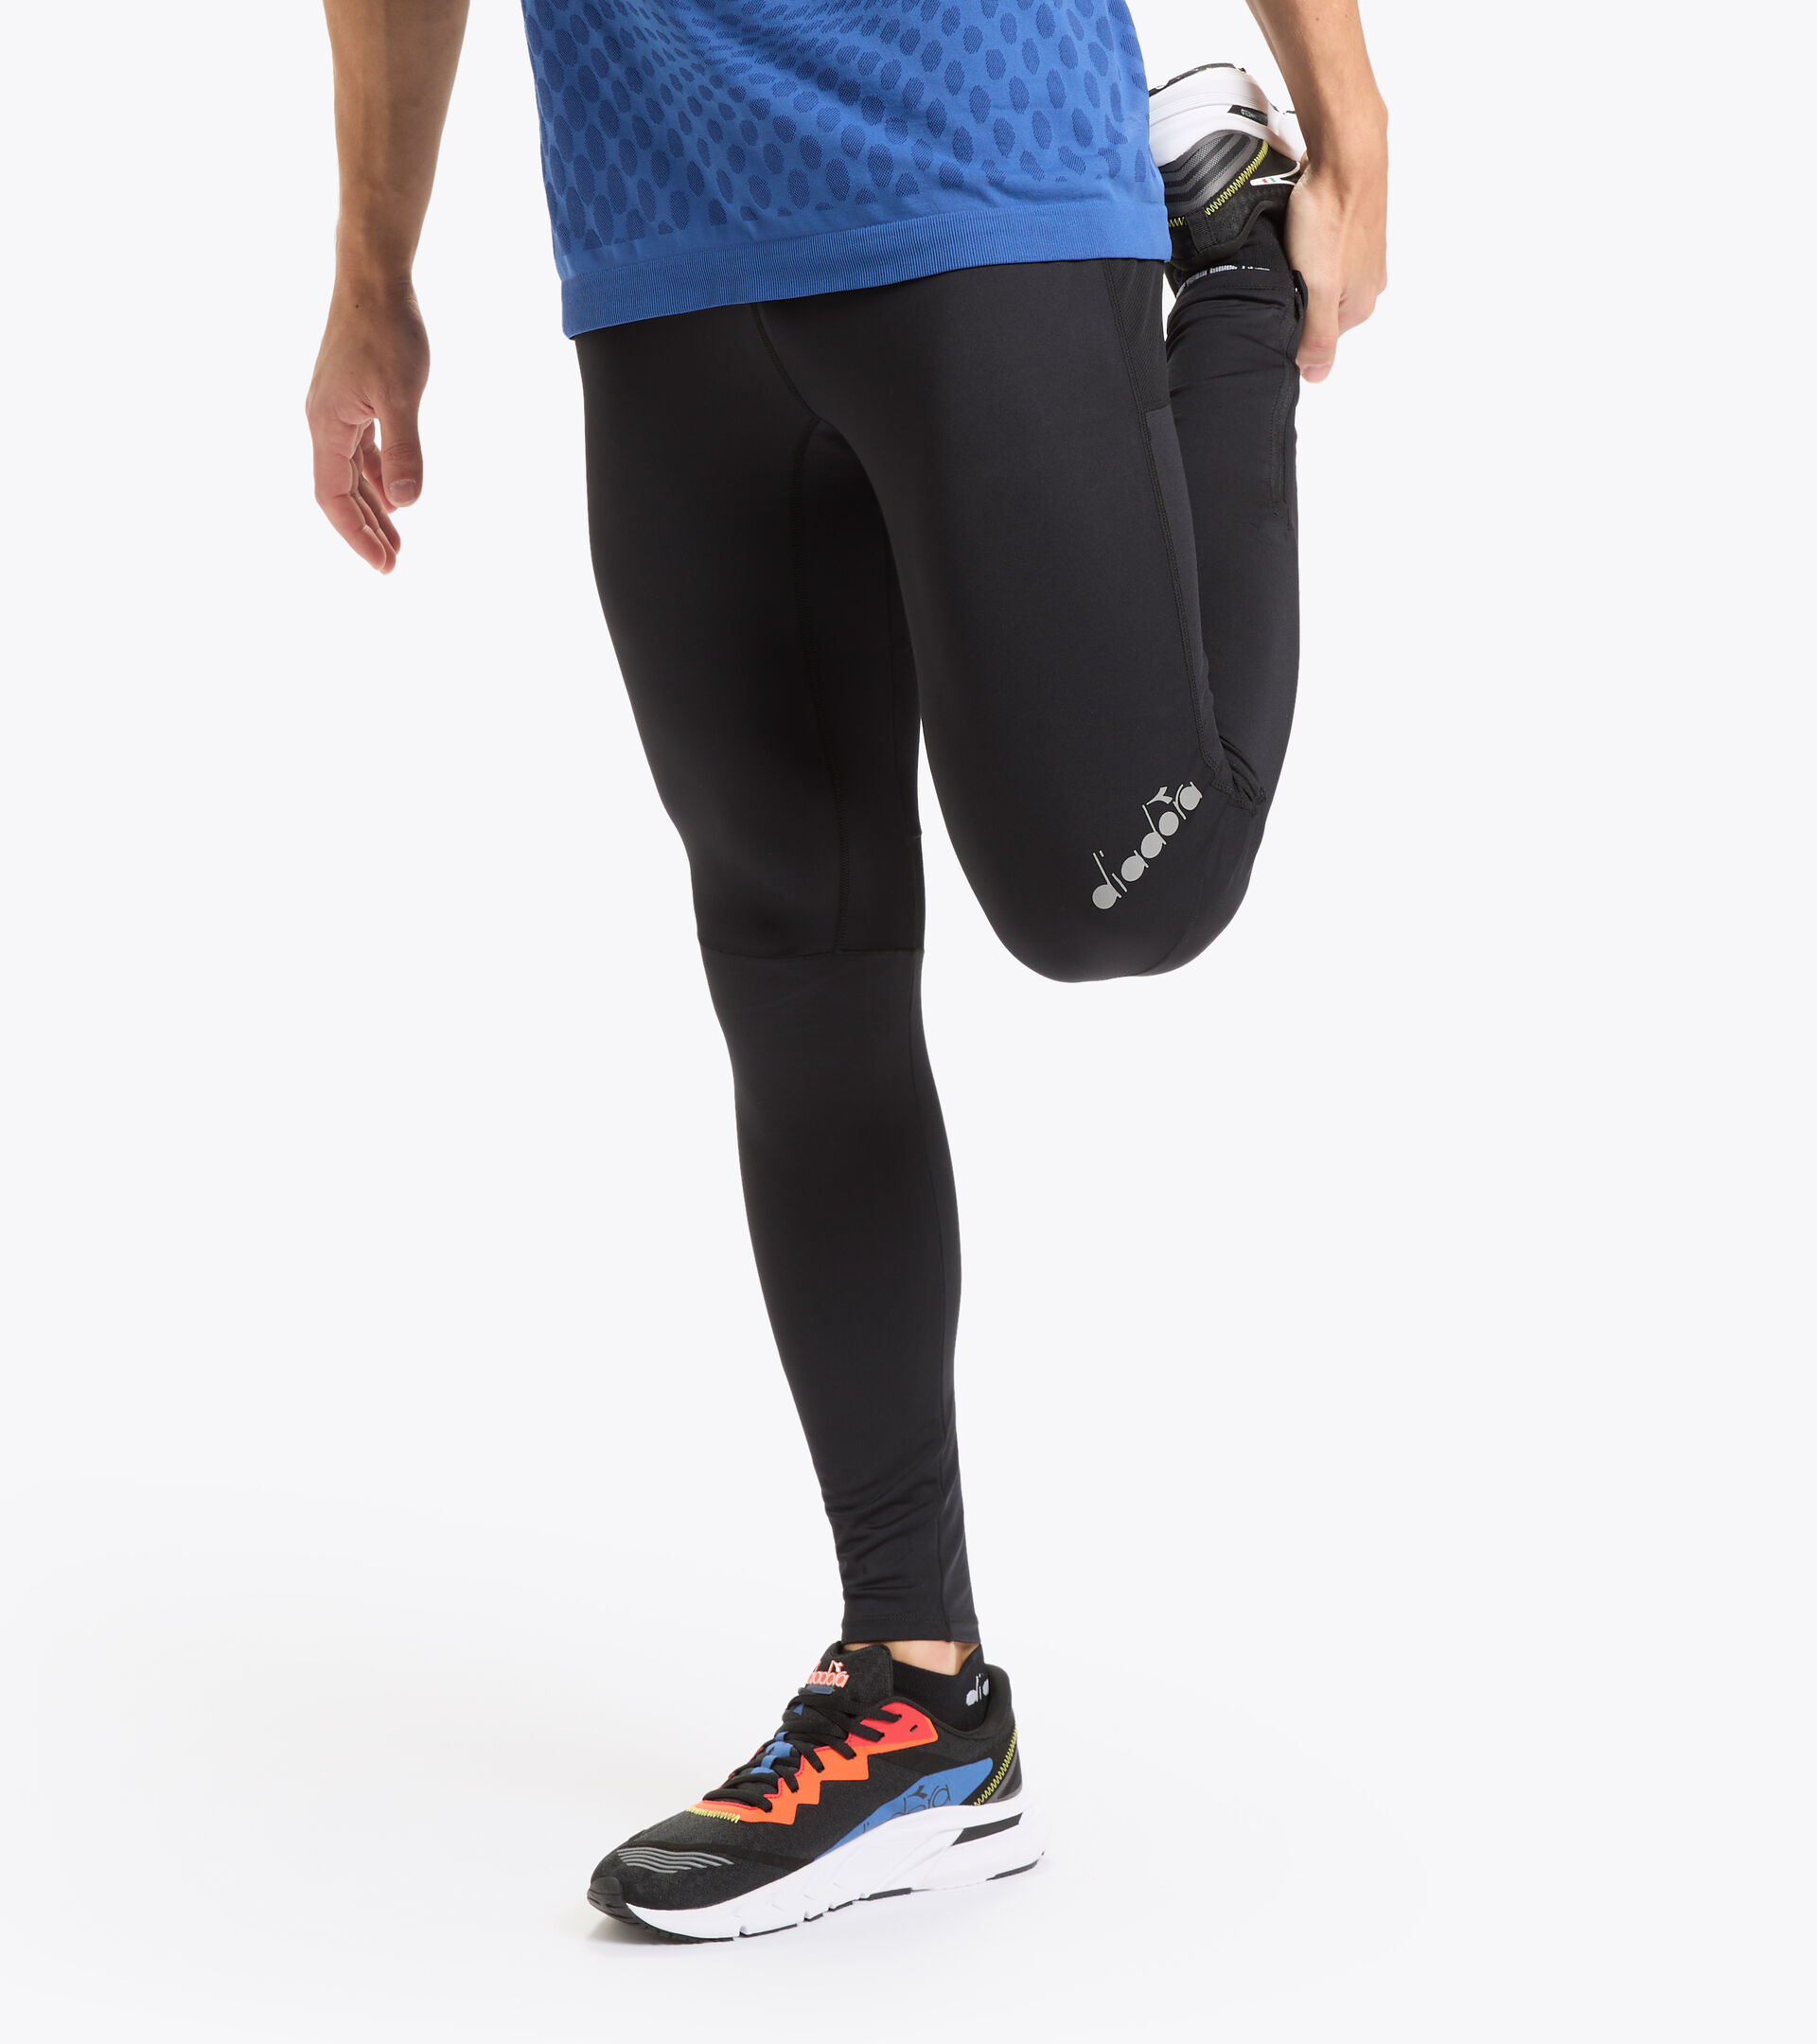 Men's Running Tights Leggings Zipper Pocket Yoga Workout Athletic Cycling  Pants